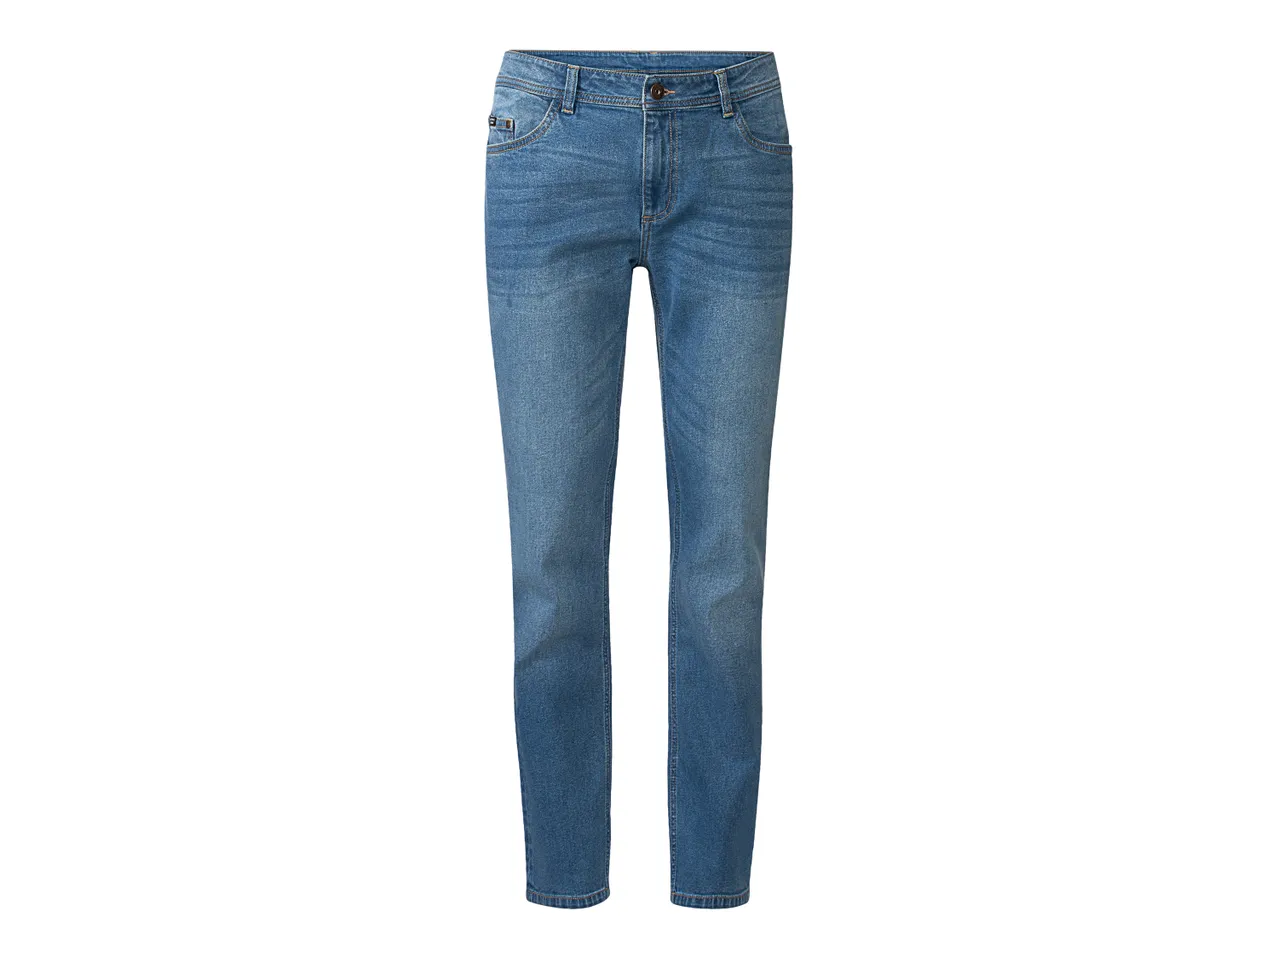 Jeans Slim Fit da uomo , prezzo 14.99 EUR 
Jeans Slim Fit da uomo Misure: 46-54 ...